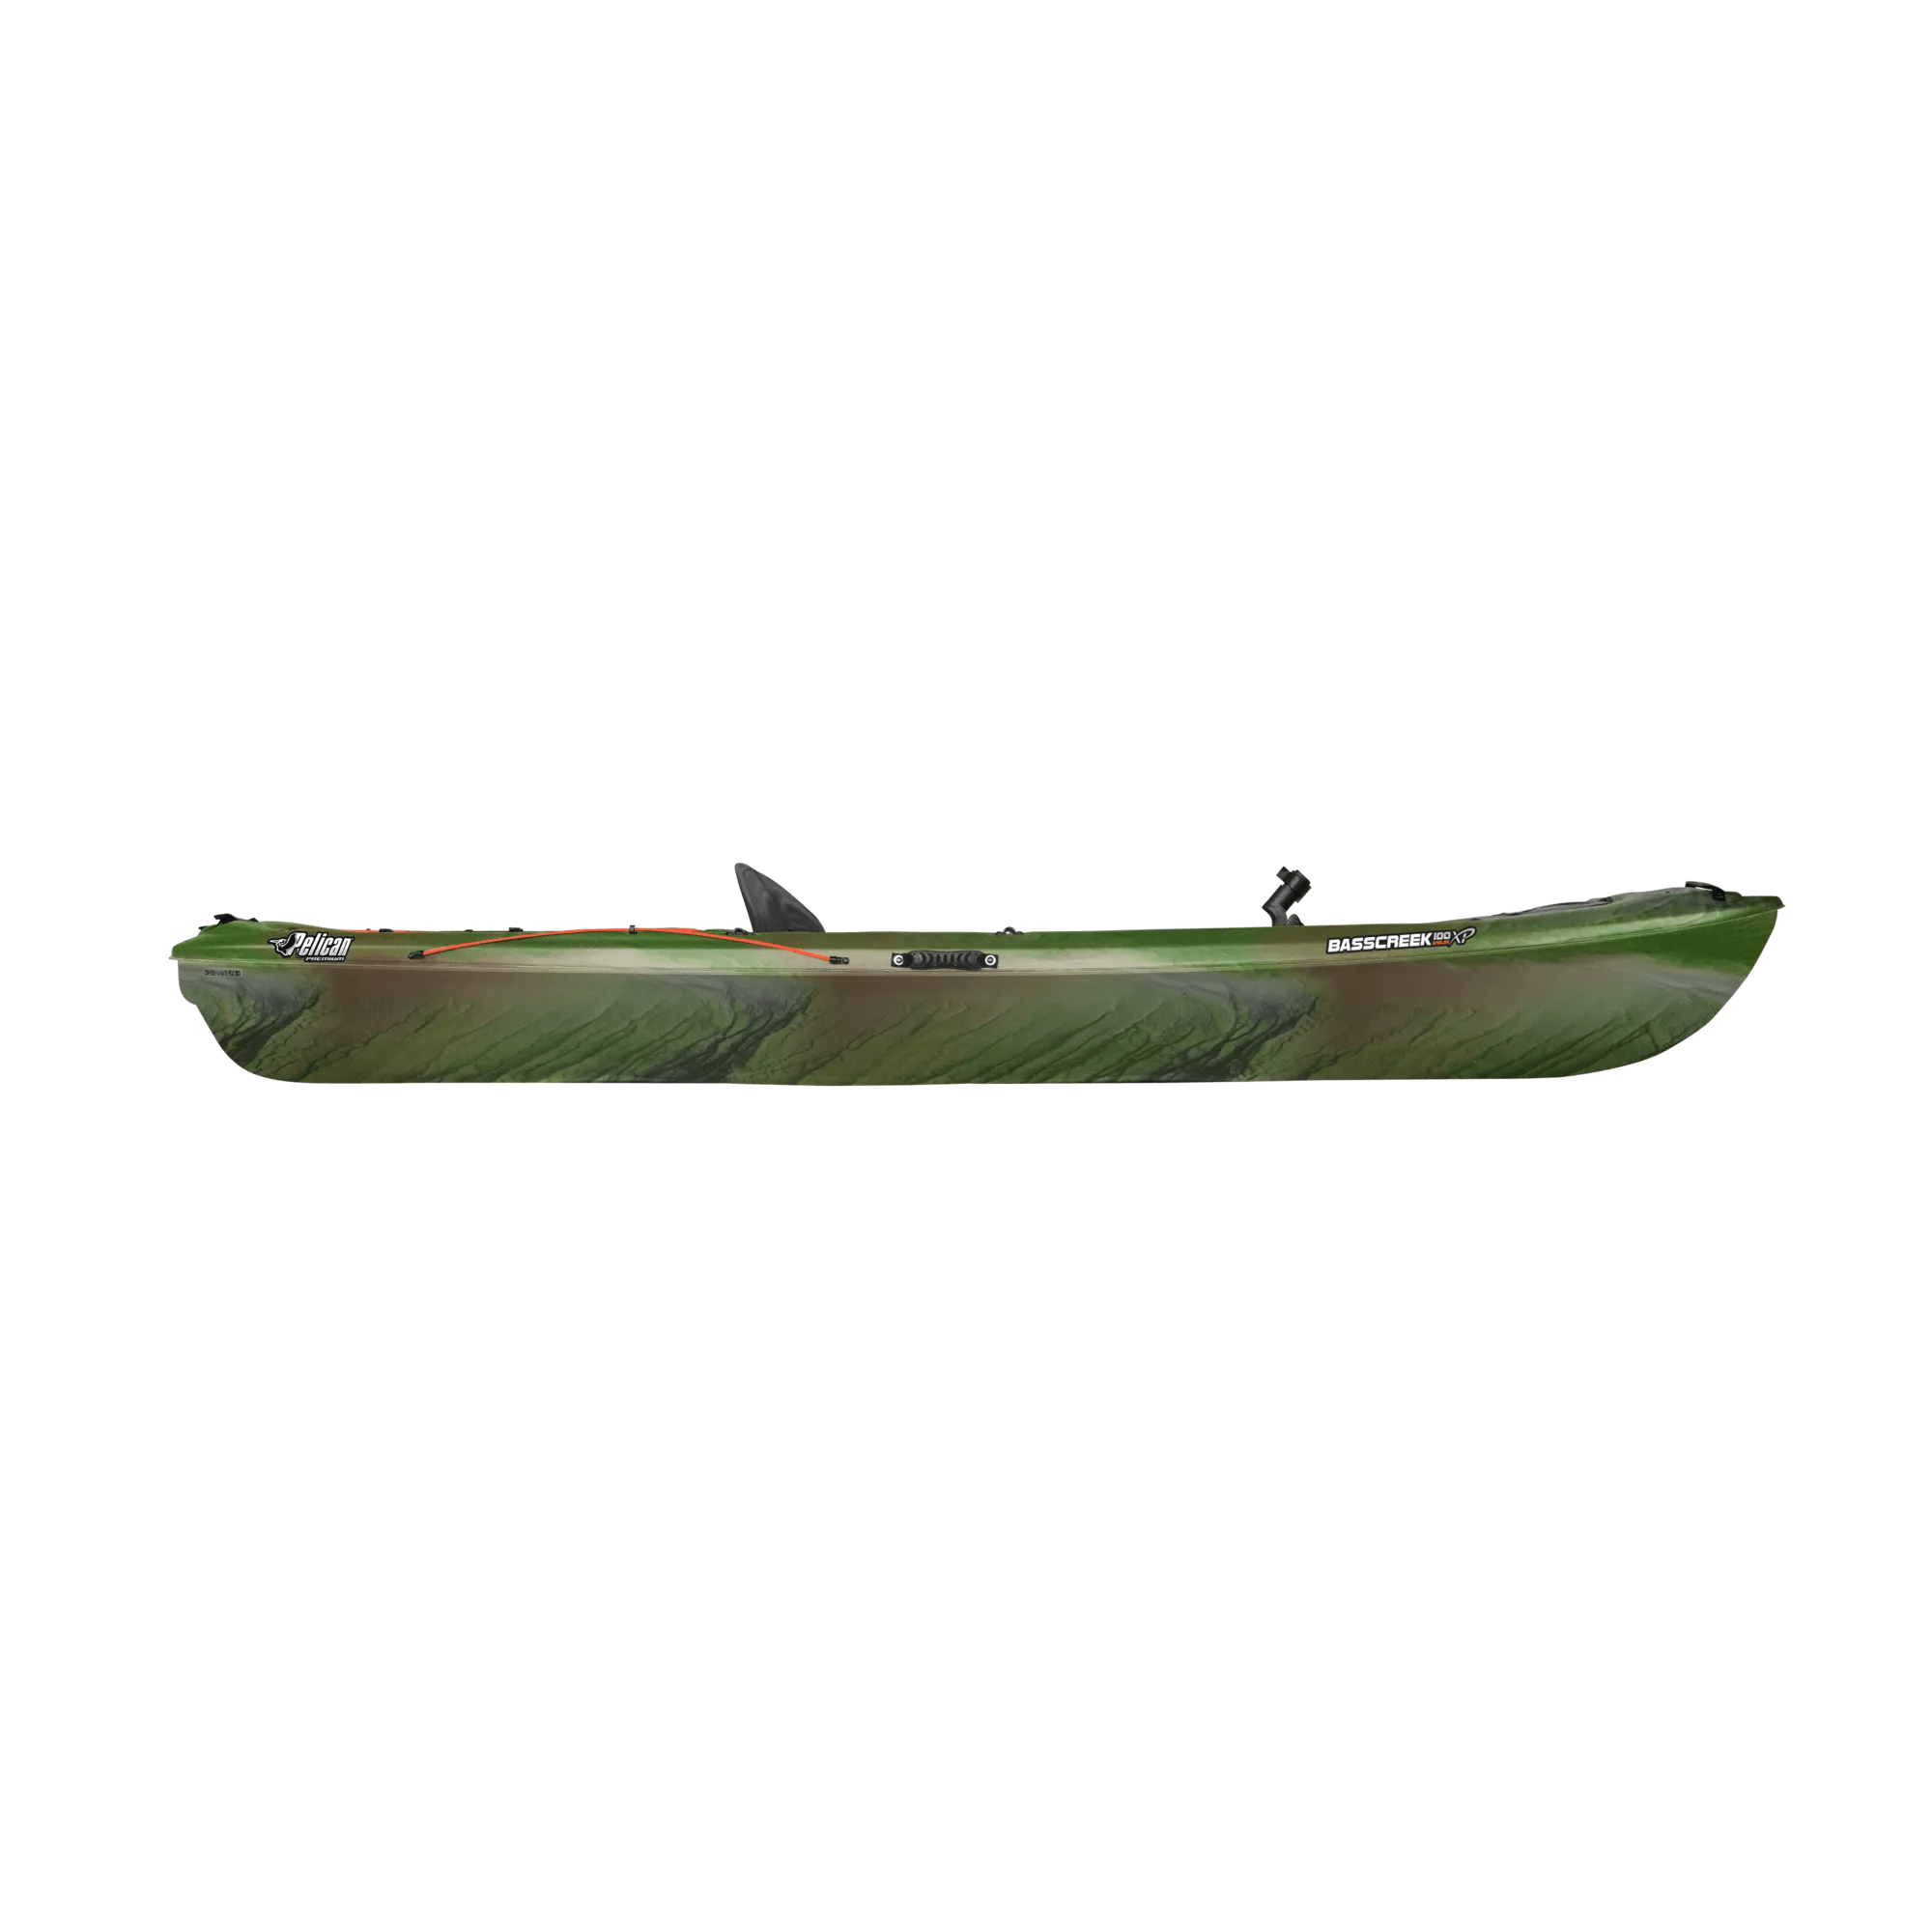 PELICAN - Basscreek 100XP Angler Fishing Kayak - Grey - KWP10P100-00 - SIDE